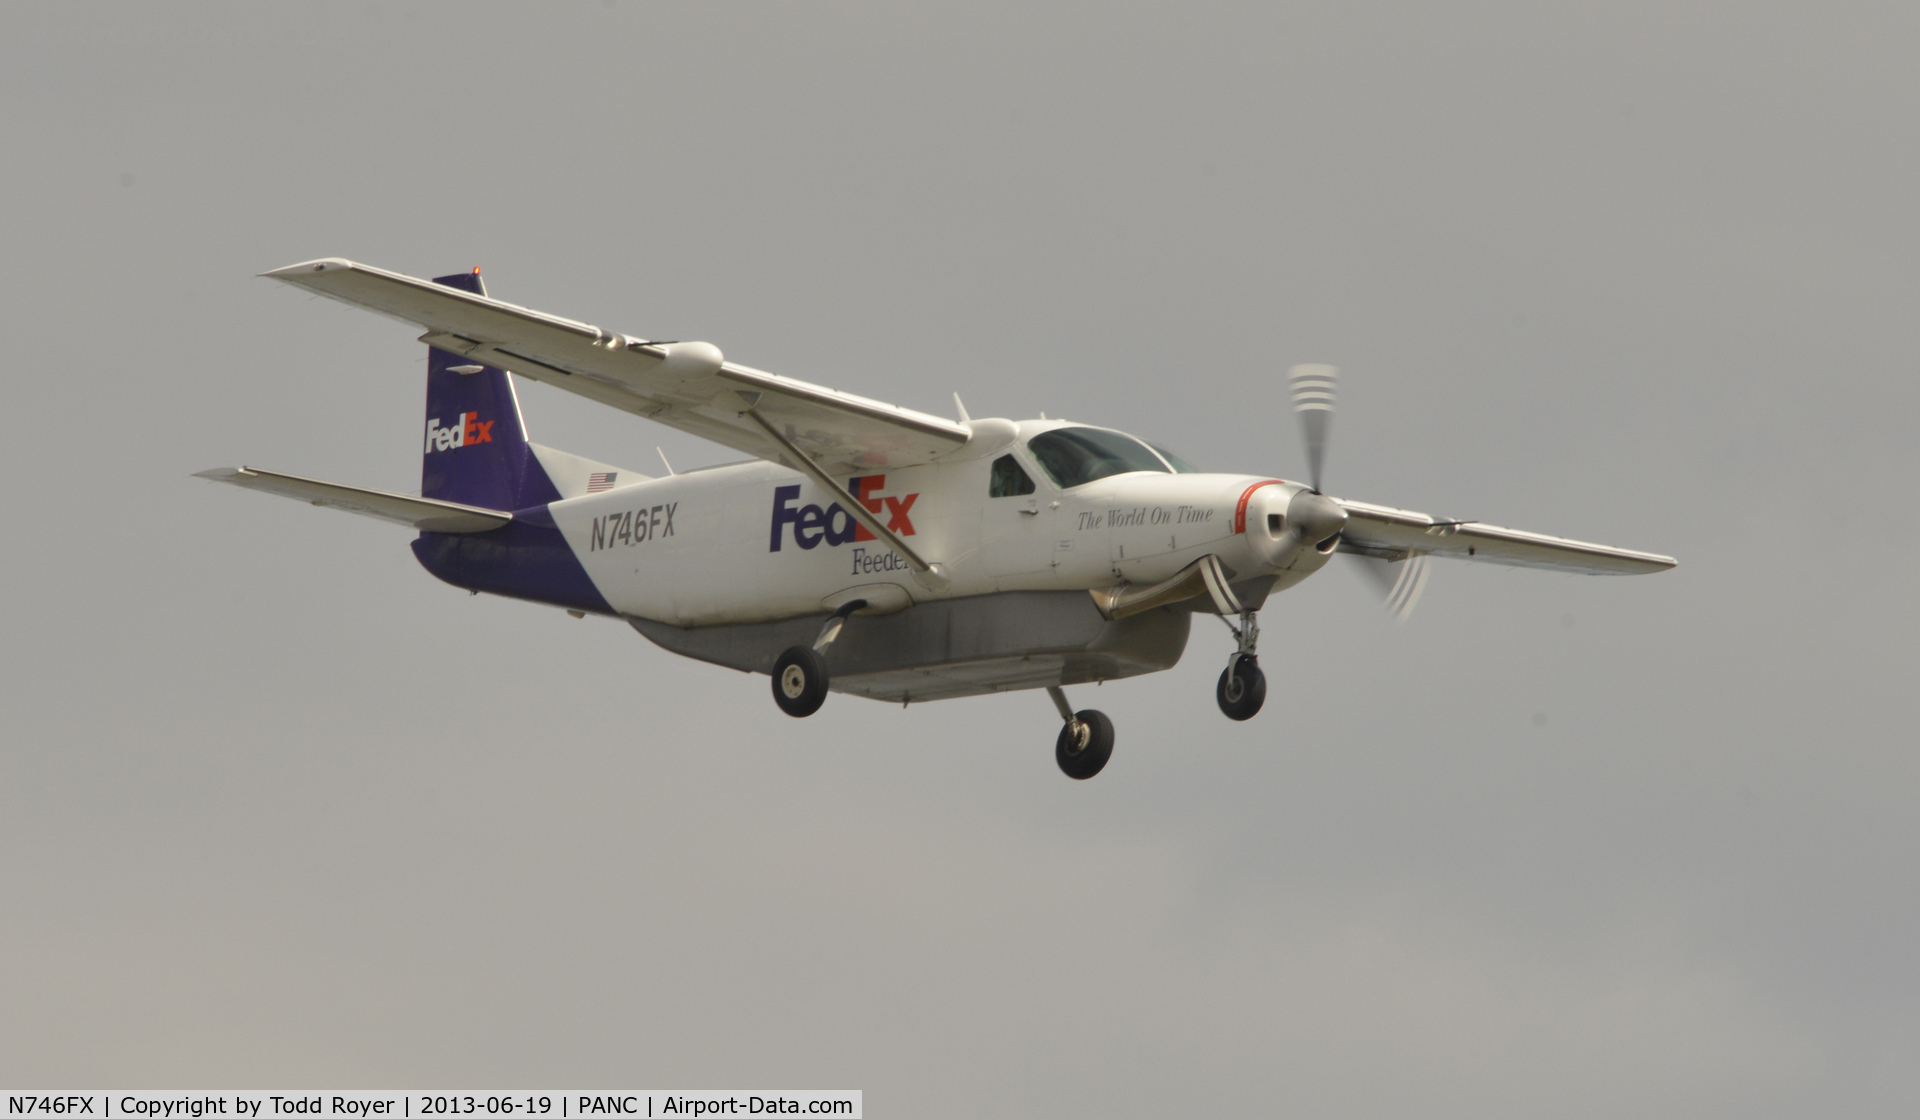 N746FX, 1995 Cessna 208B Super Cargomaster C/N 208B0498, Arriving at Anchorage